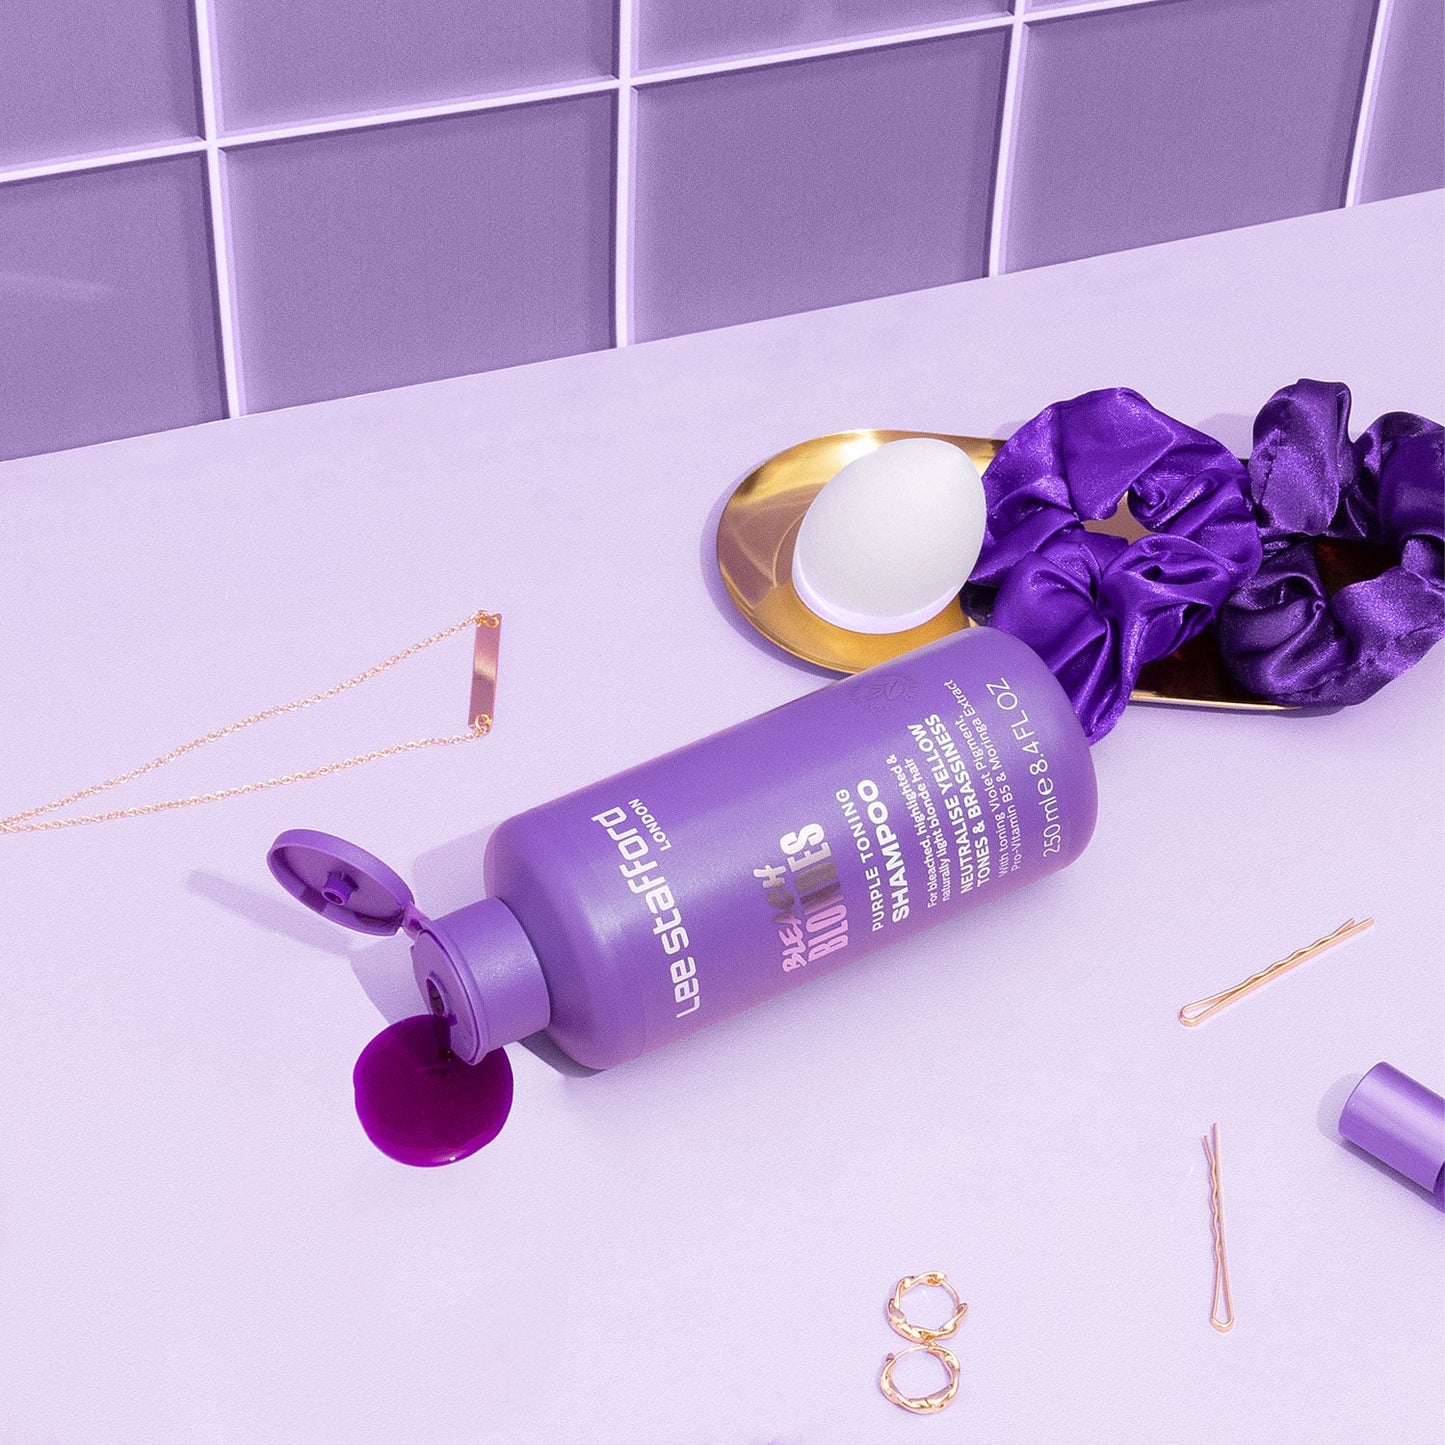 Bleach Blondes Purple Toning Shampoo